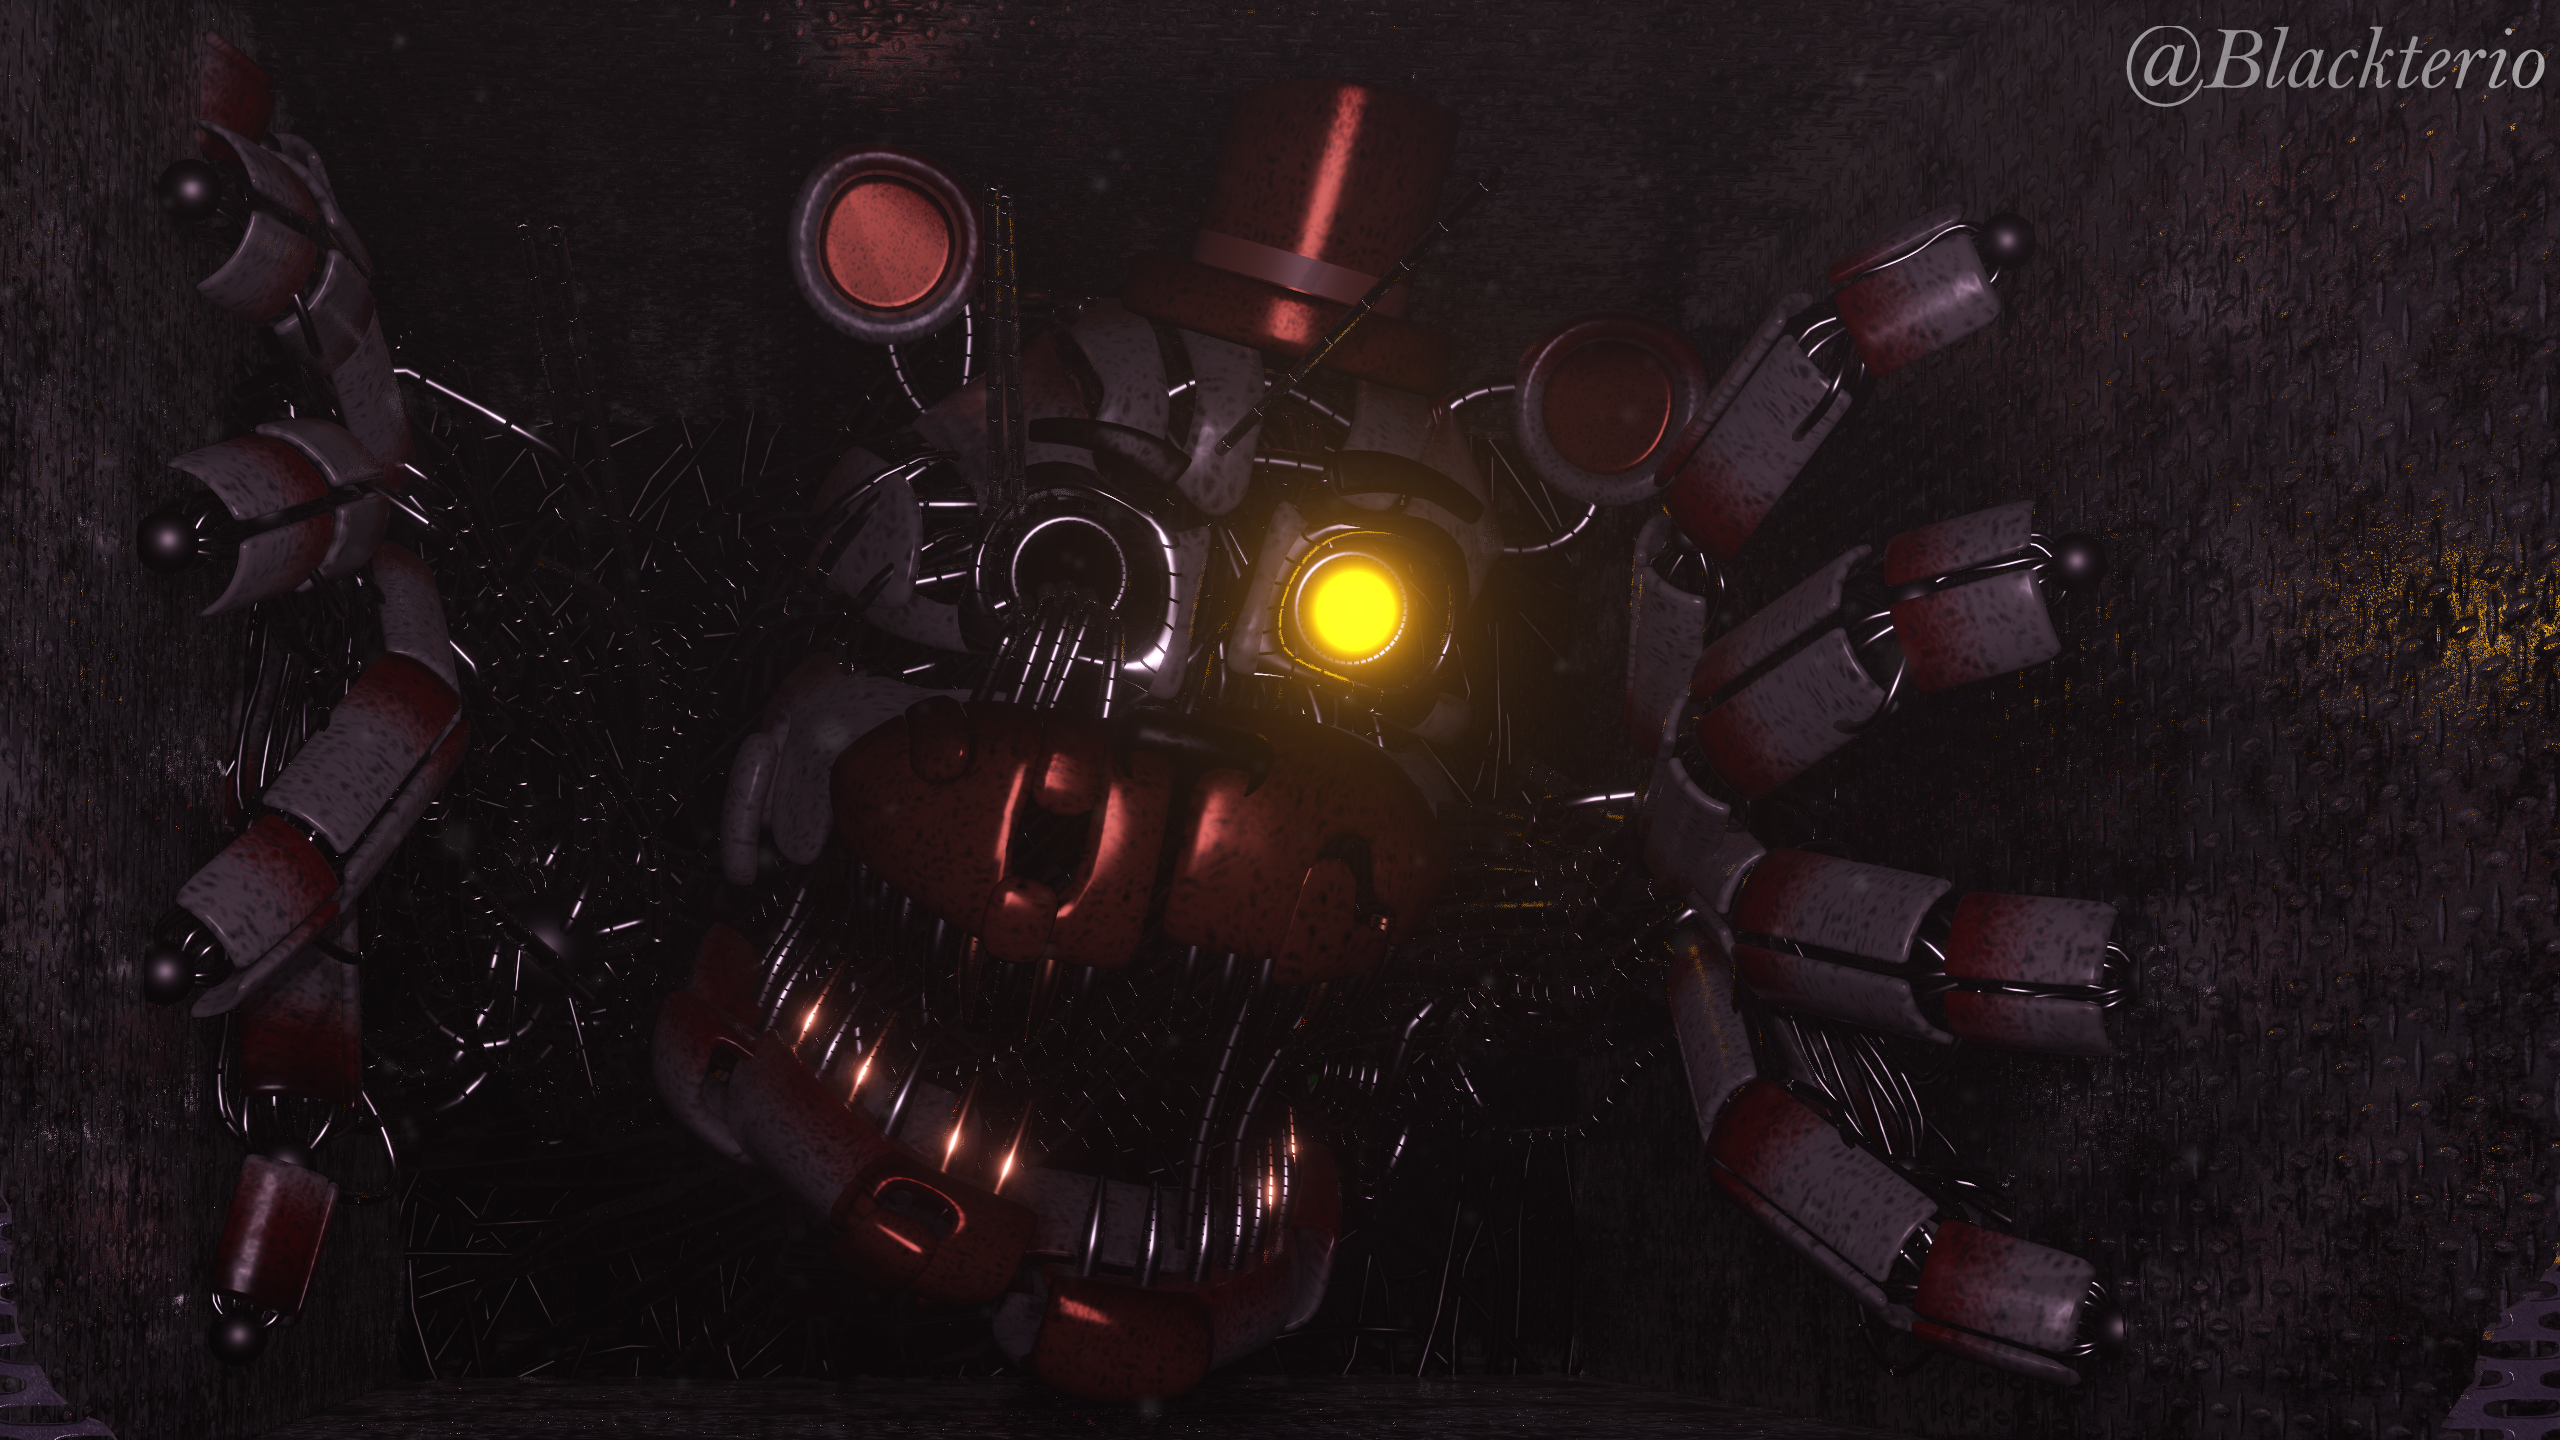 Molten Freddy Jumpscare (alternative) by MisterioArg on DeviantArt